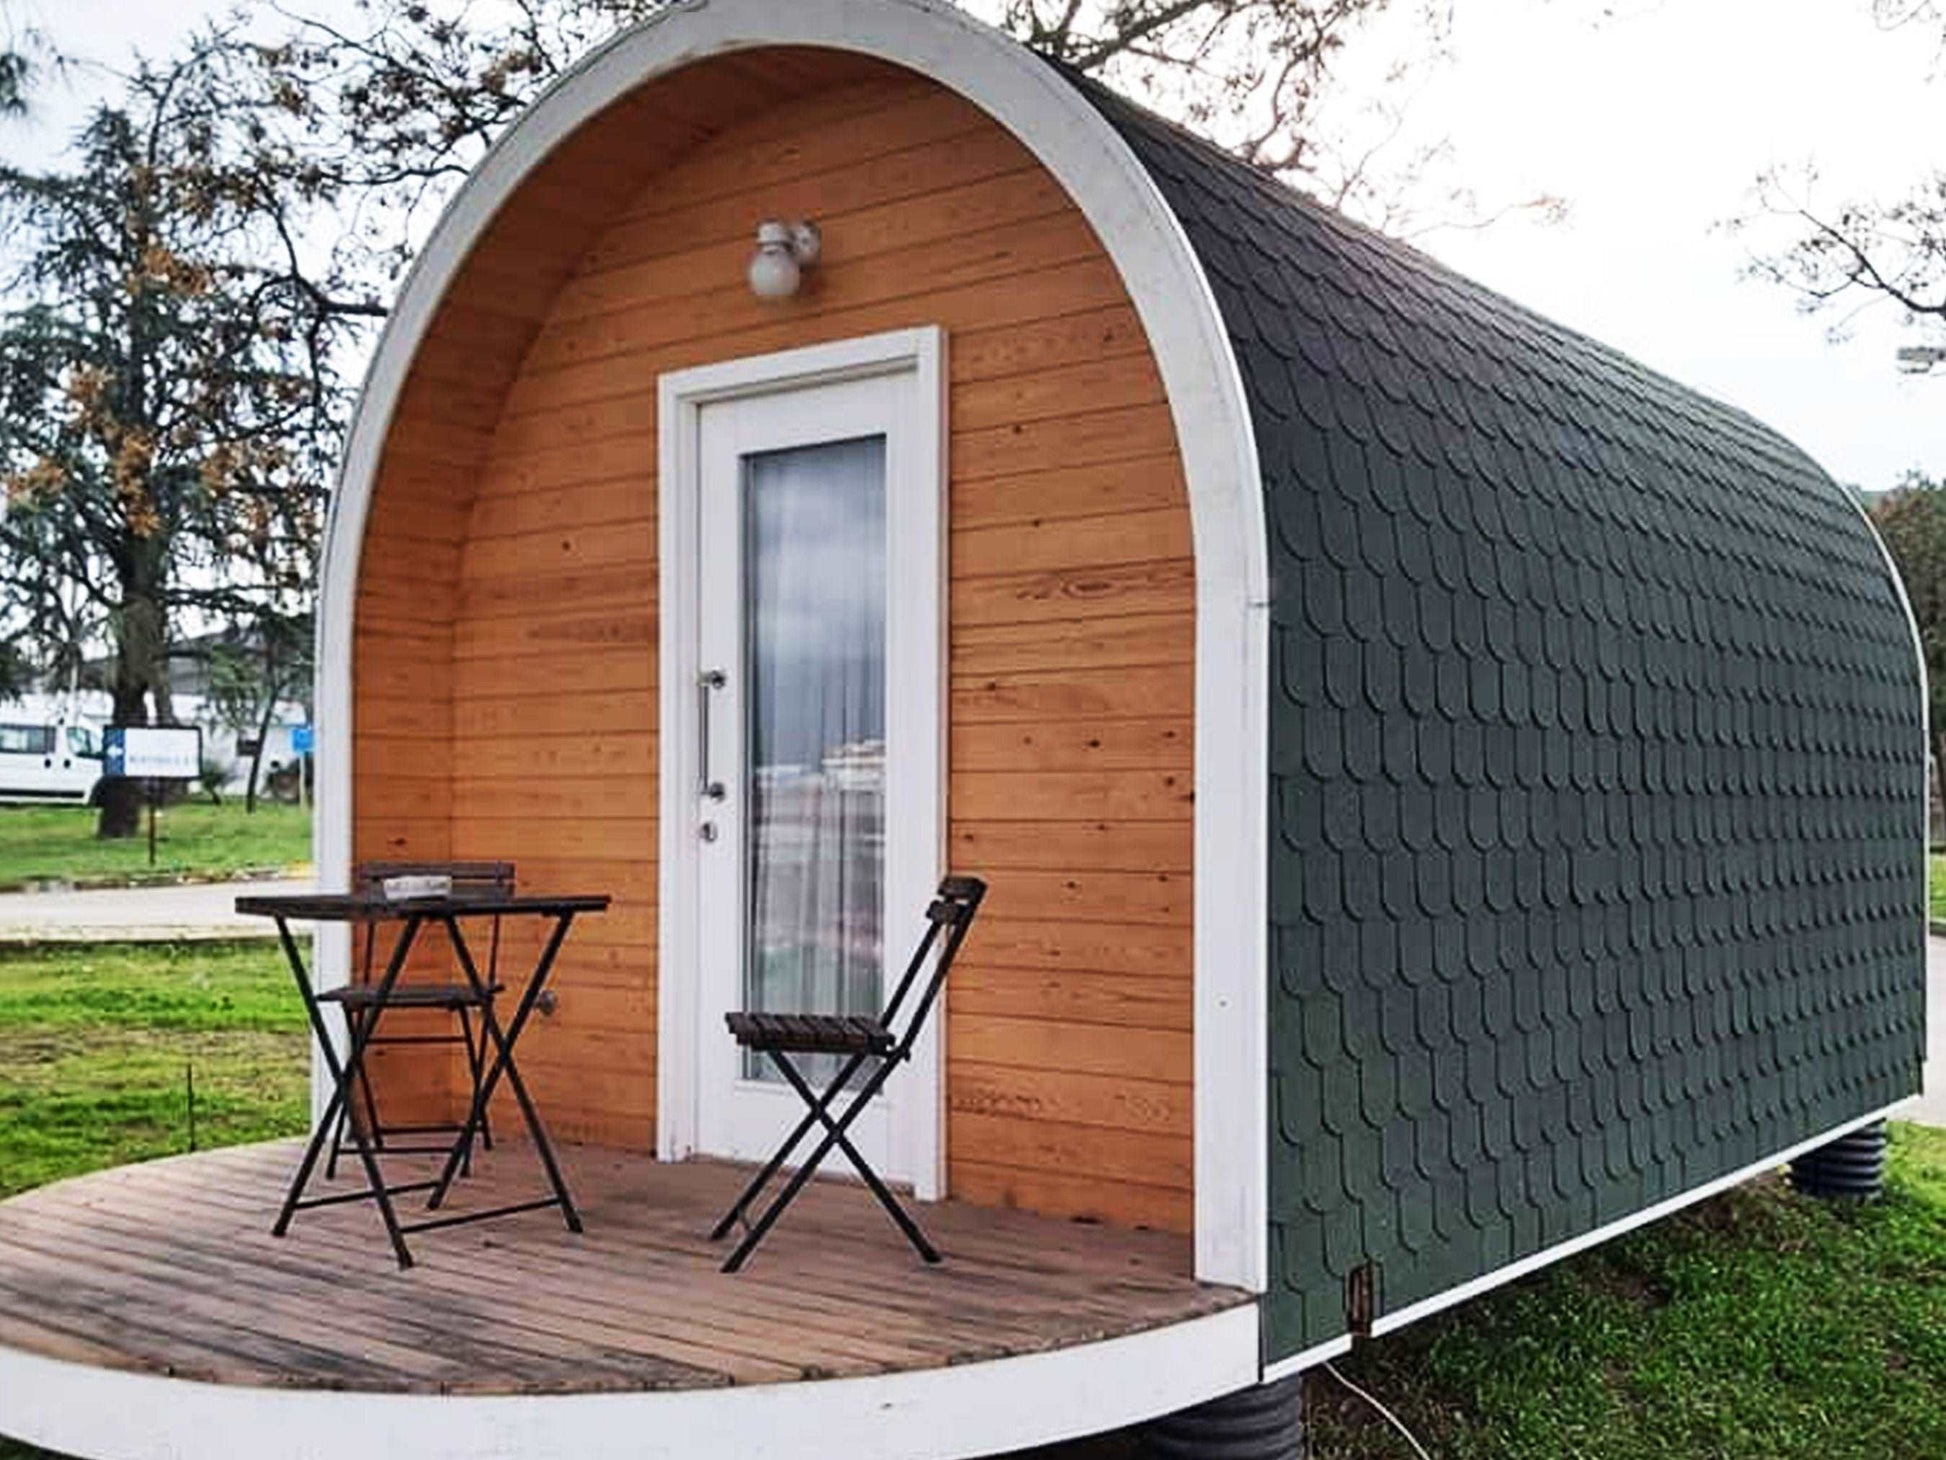 Tiny cabin plans, backyard office plans, small tiny house